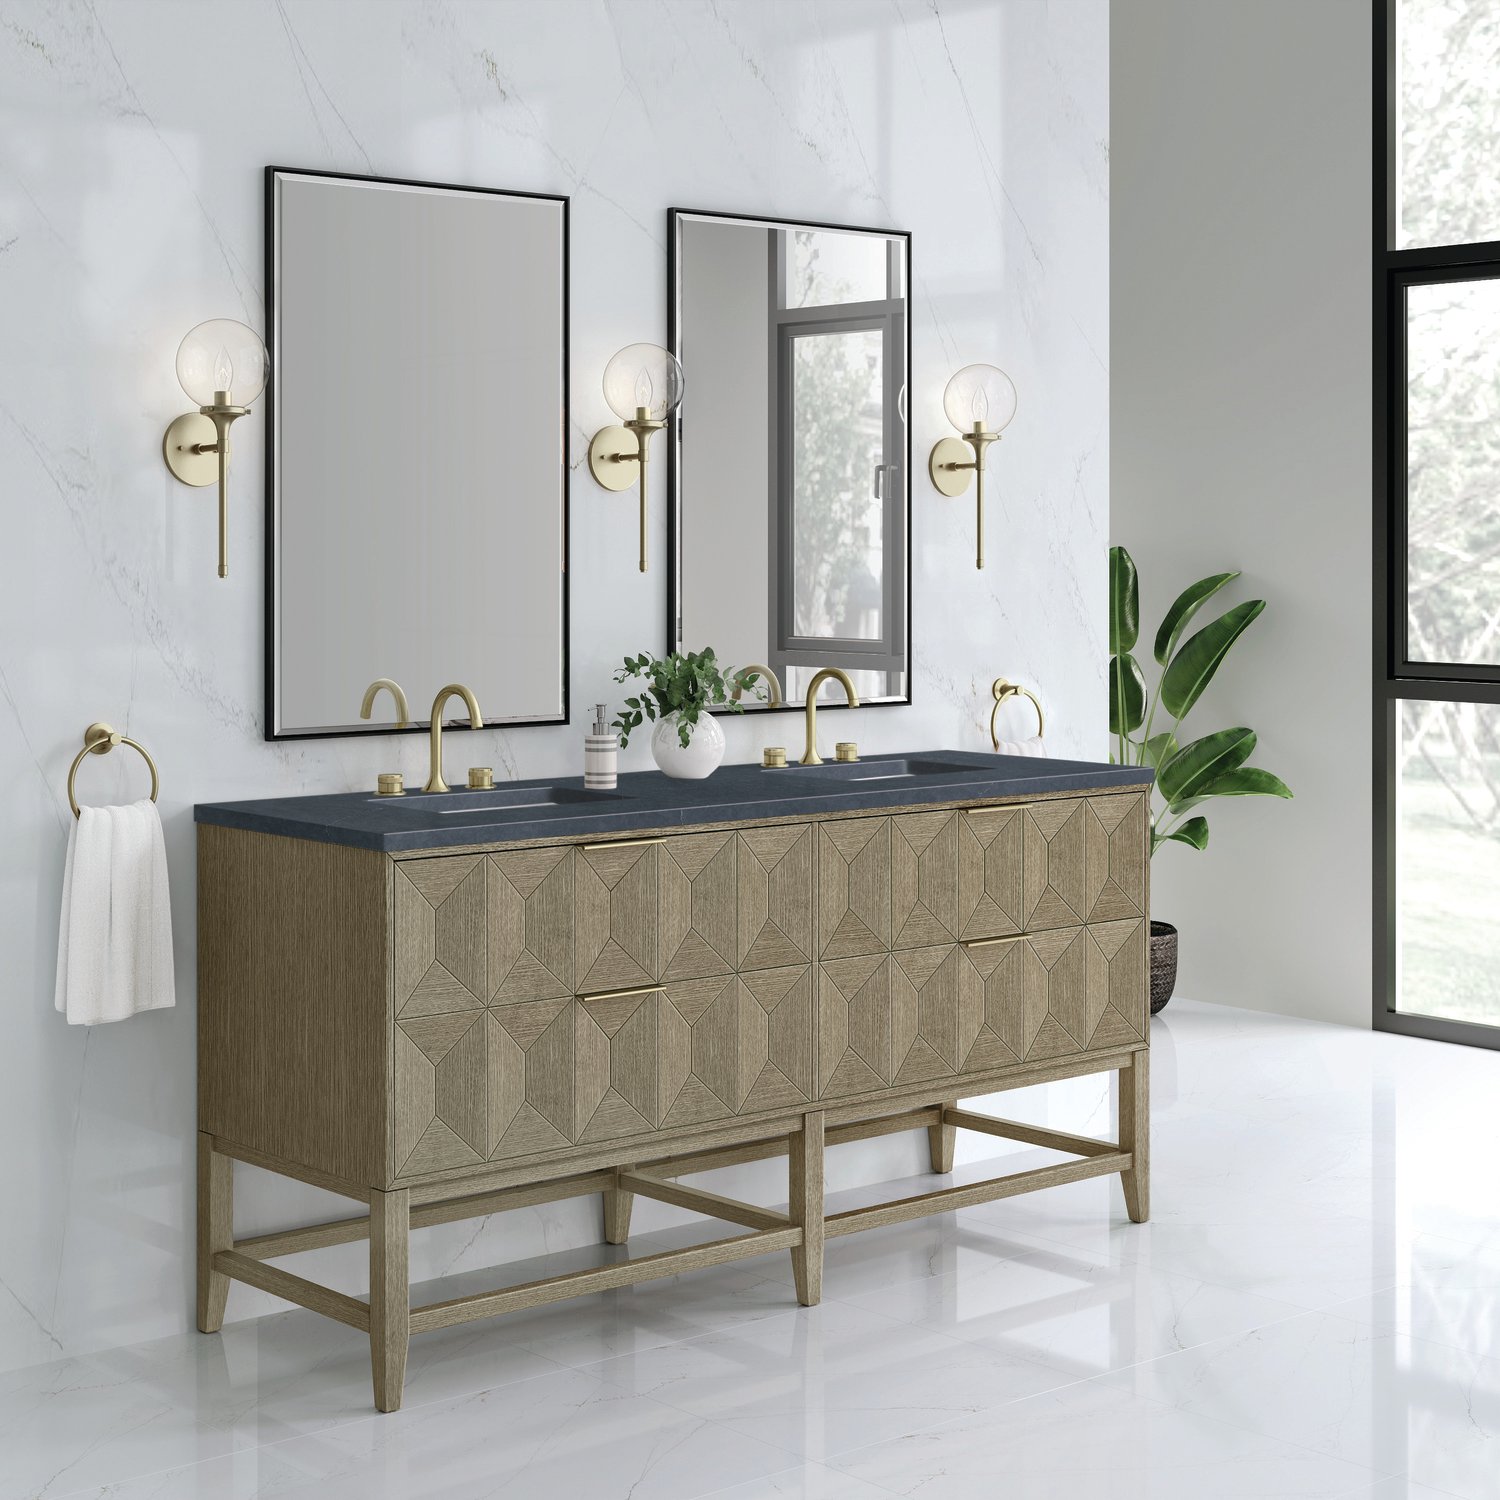 3 piece bathroom vanity set James Martin Vanity Pebble Oak Modern